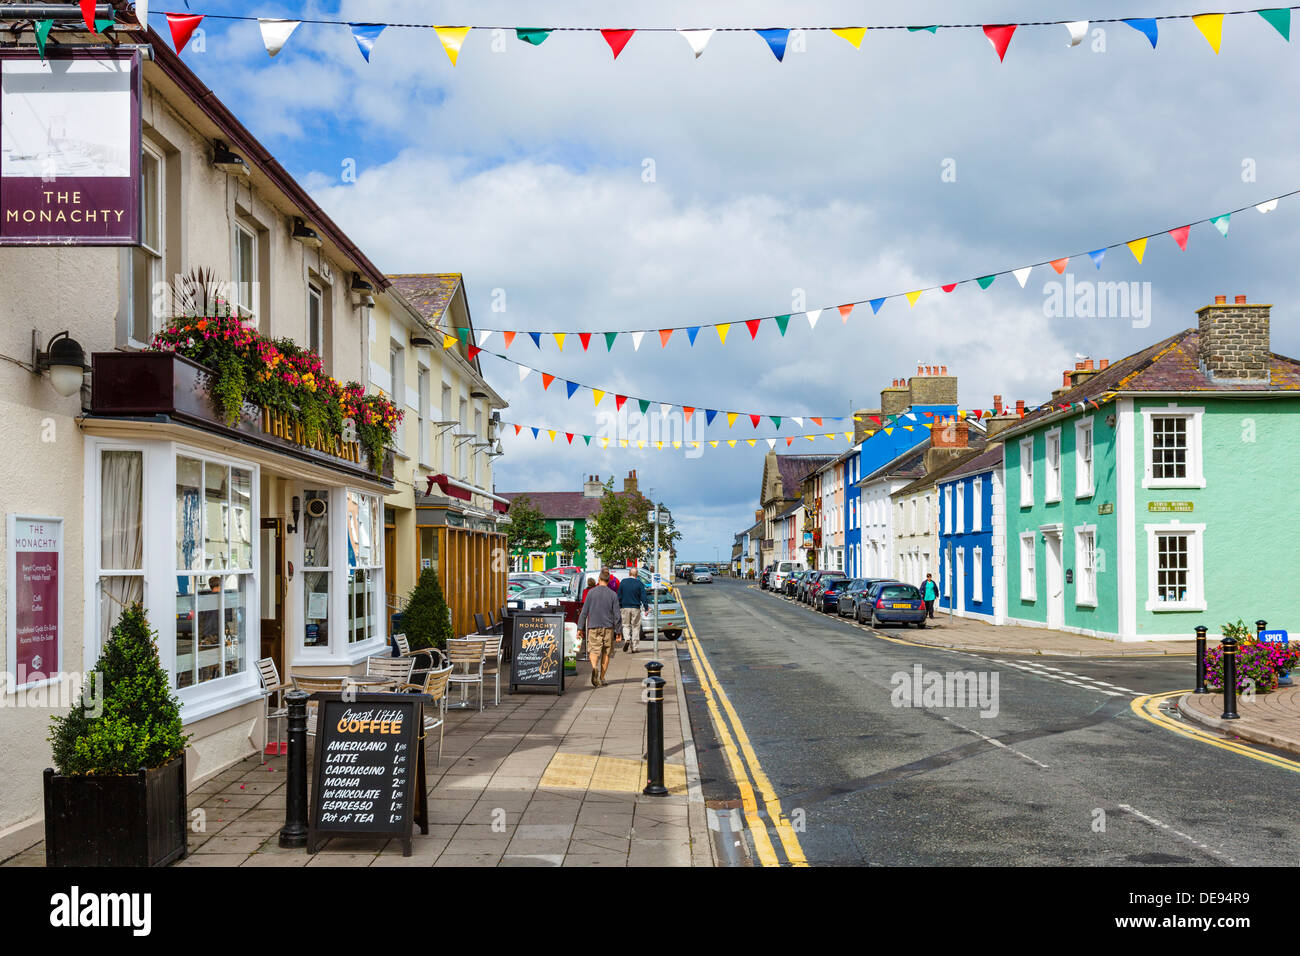 The Monachty pub and hotel on Market Street in the seaside village of Aberaeron, Ceredigion, Wales, UK Stock Photo